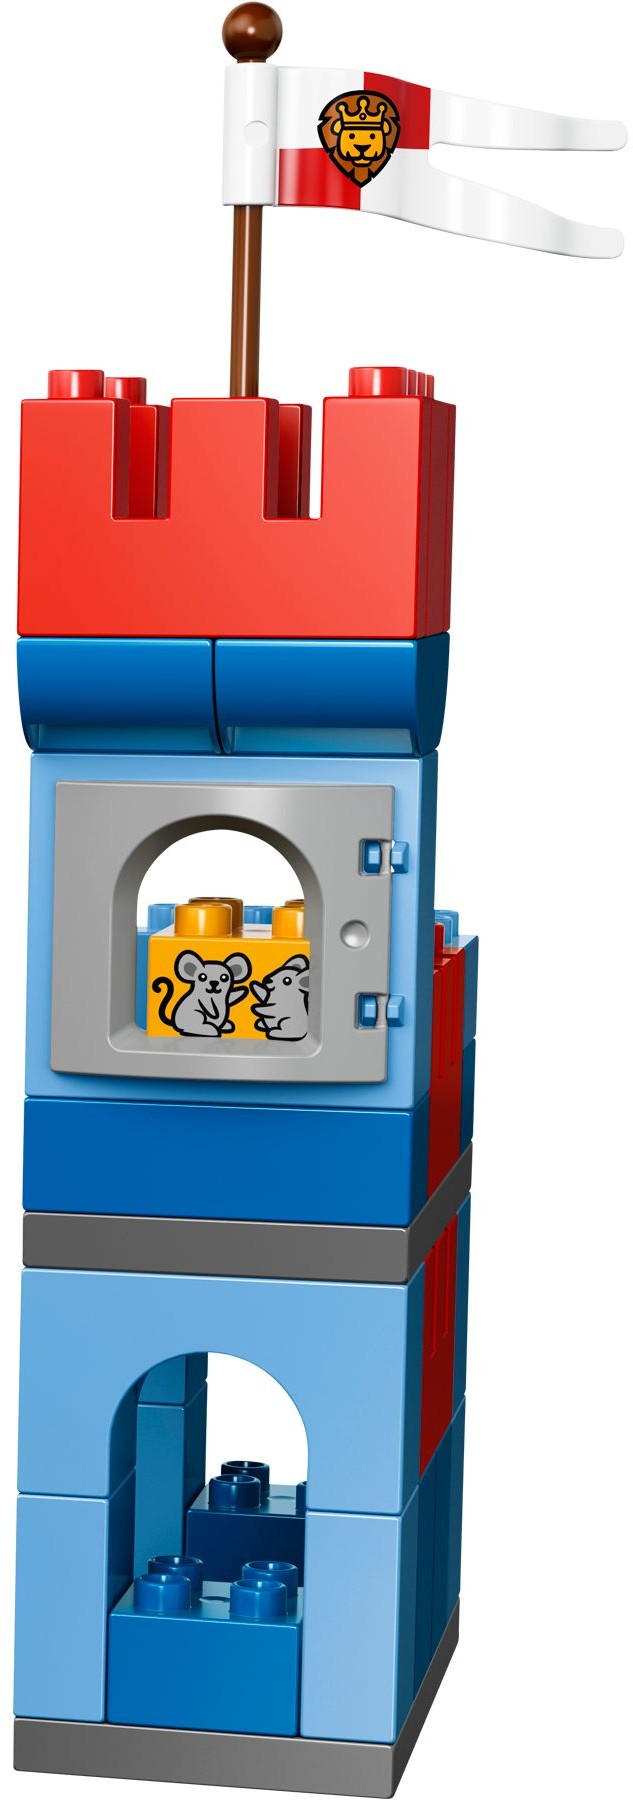 10577 Big Royal Castle LEGO Set, Deals & Reviews